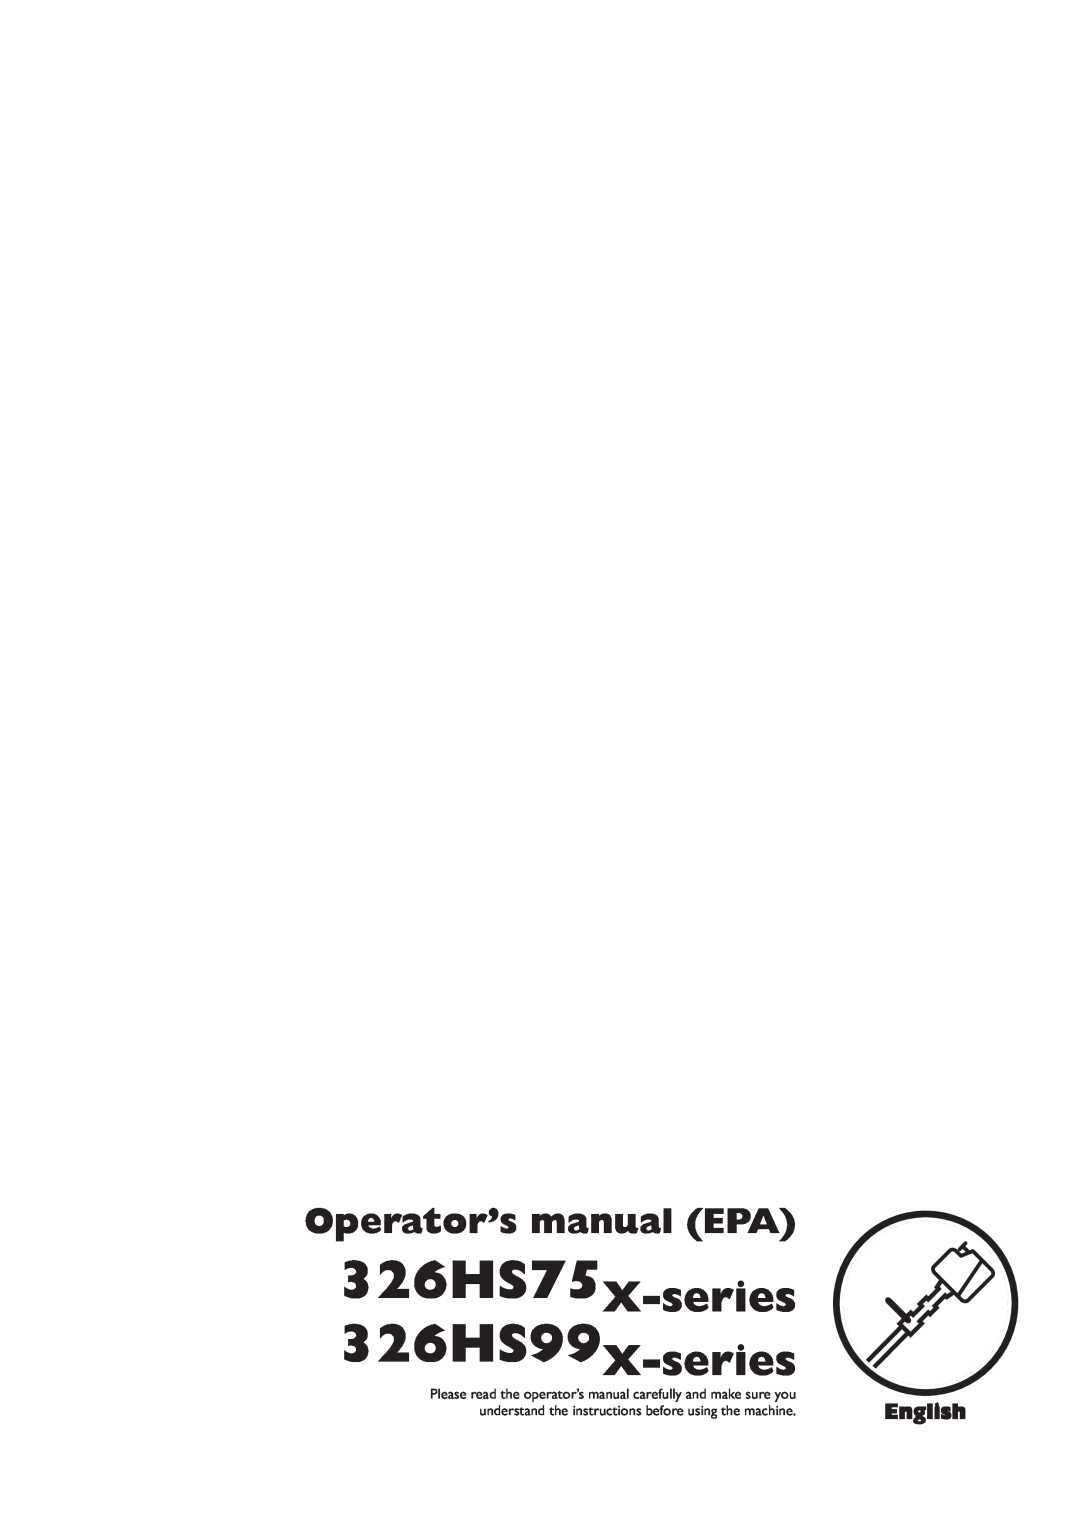 Husqvarna manual 326HS75X-series 326HS99X-series, Operator’s manual EPA, English 